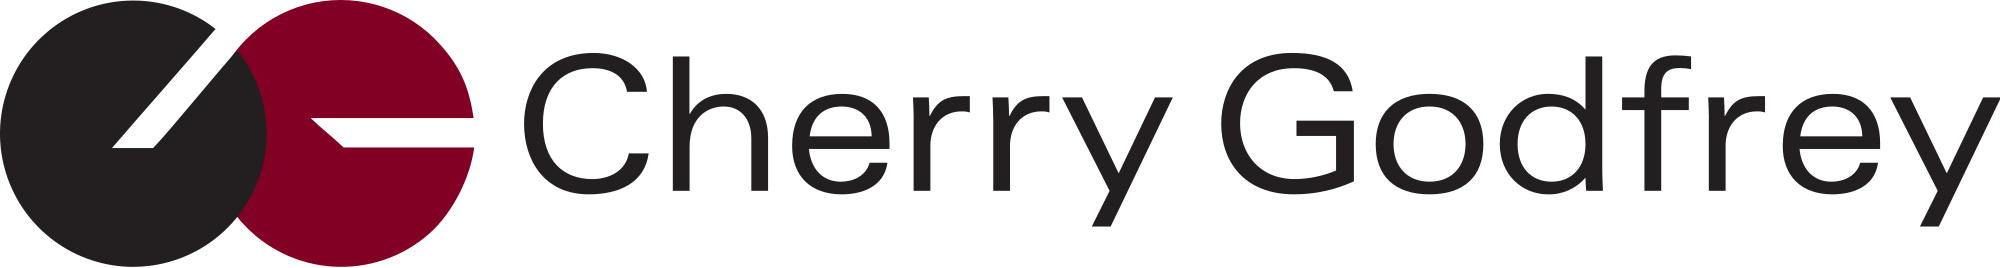 Cherry Godfrey